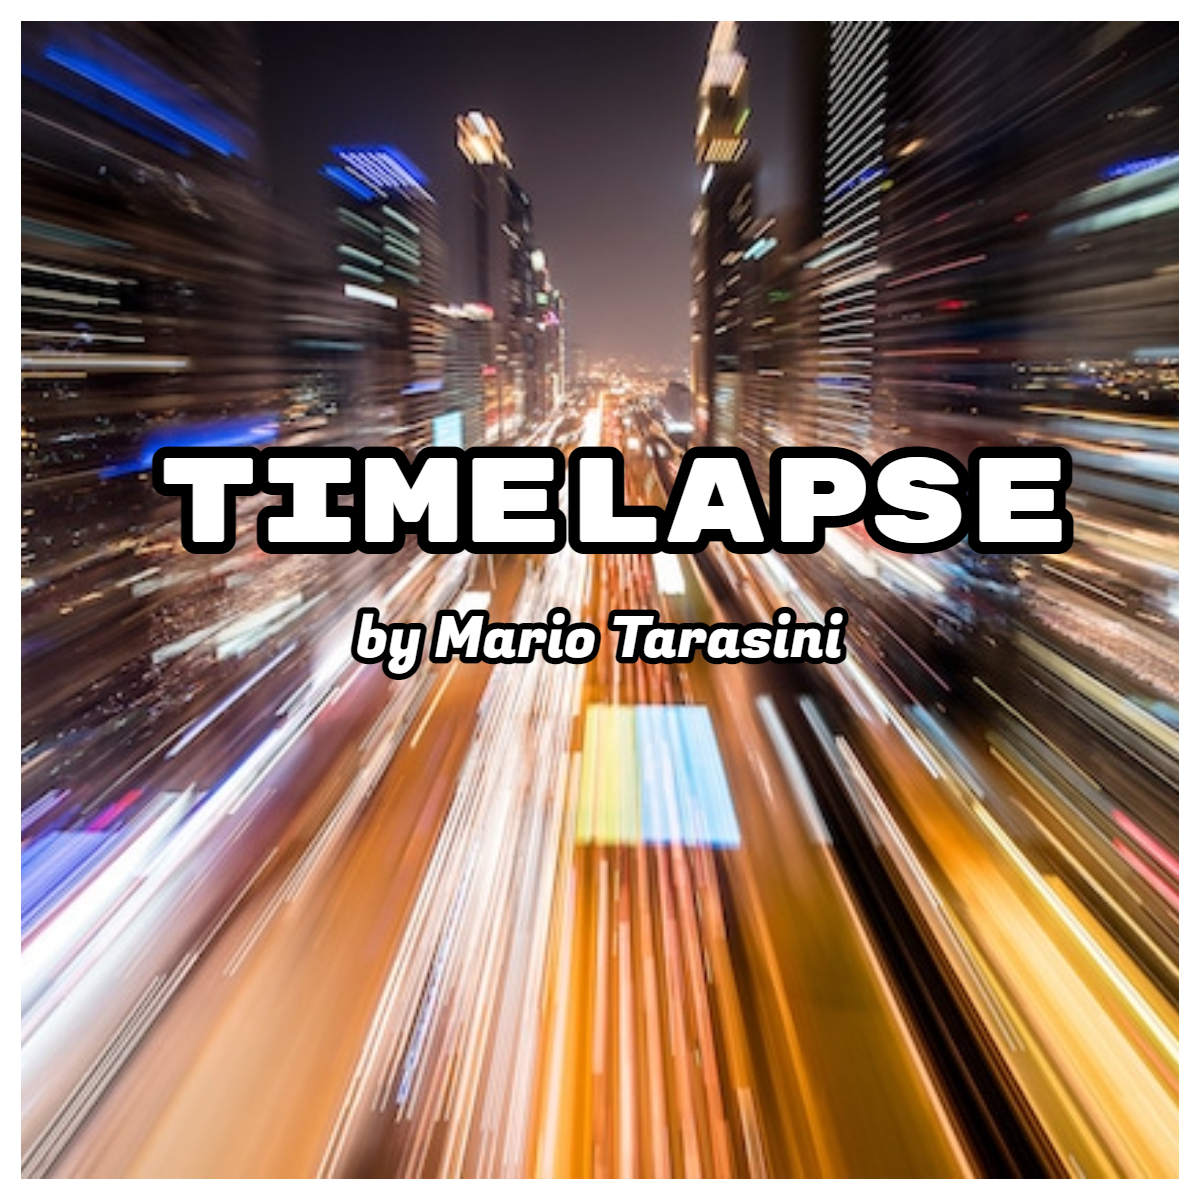 Timelapse by Mario Tarasini (Mp4 Video Download)